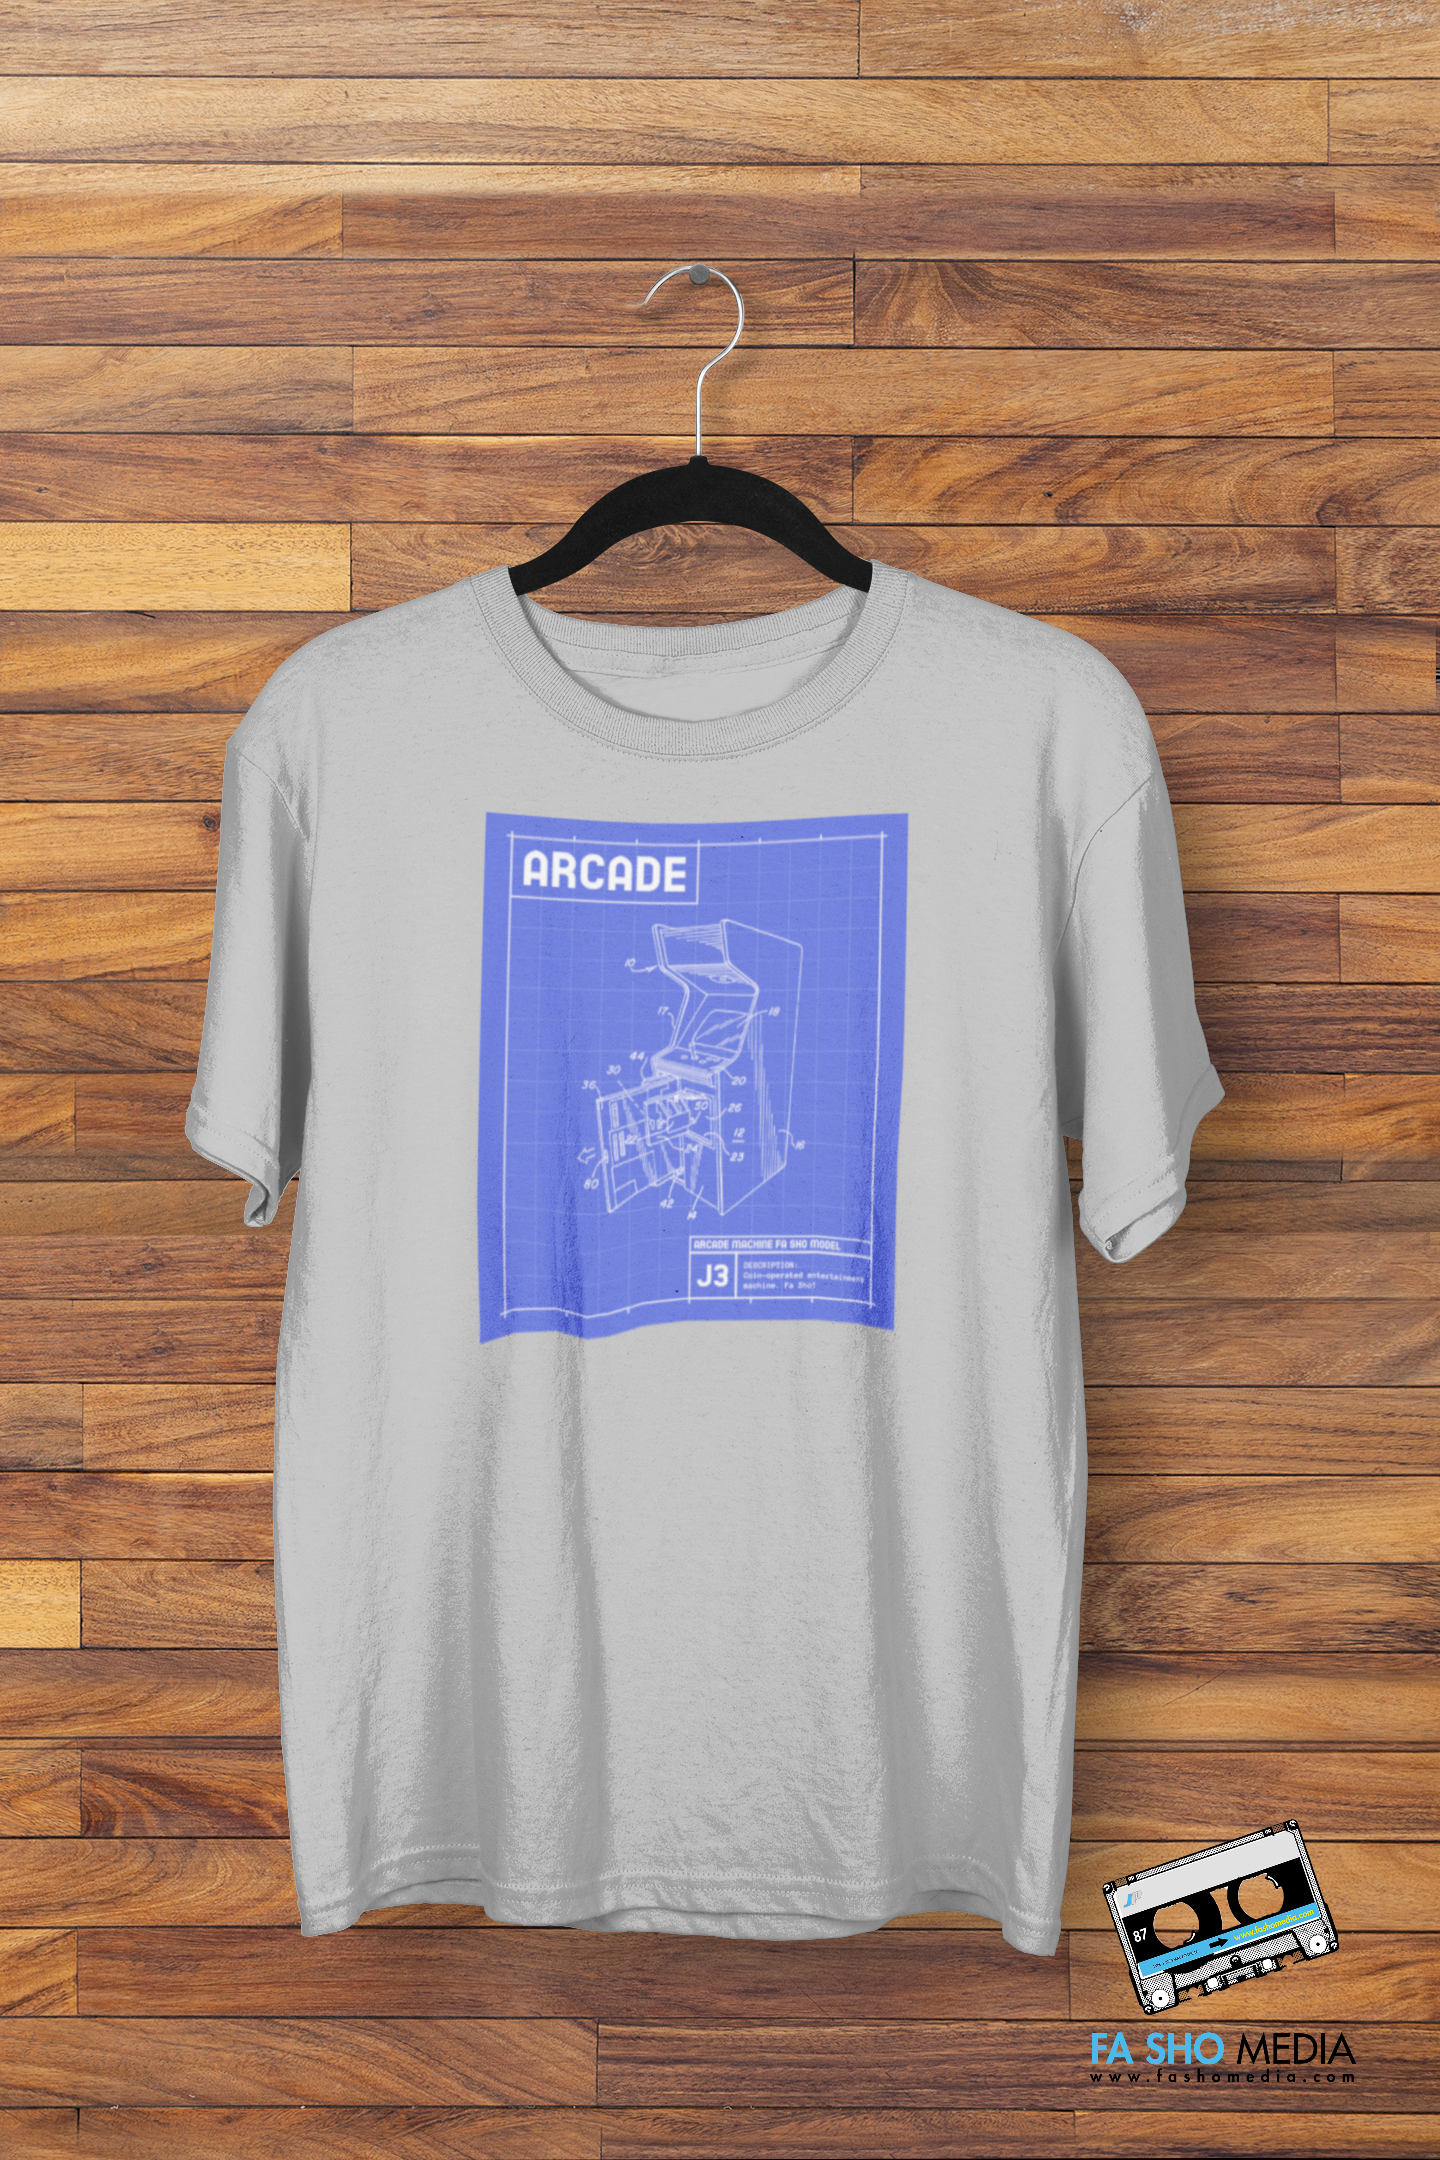 Arcade Machine Shirt (Men's)